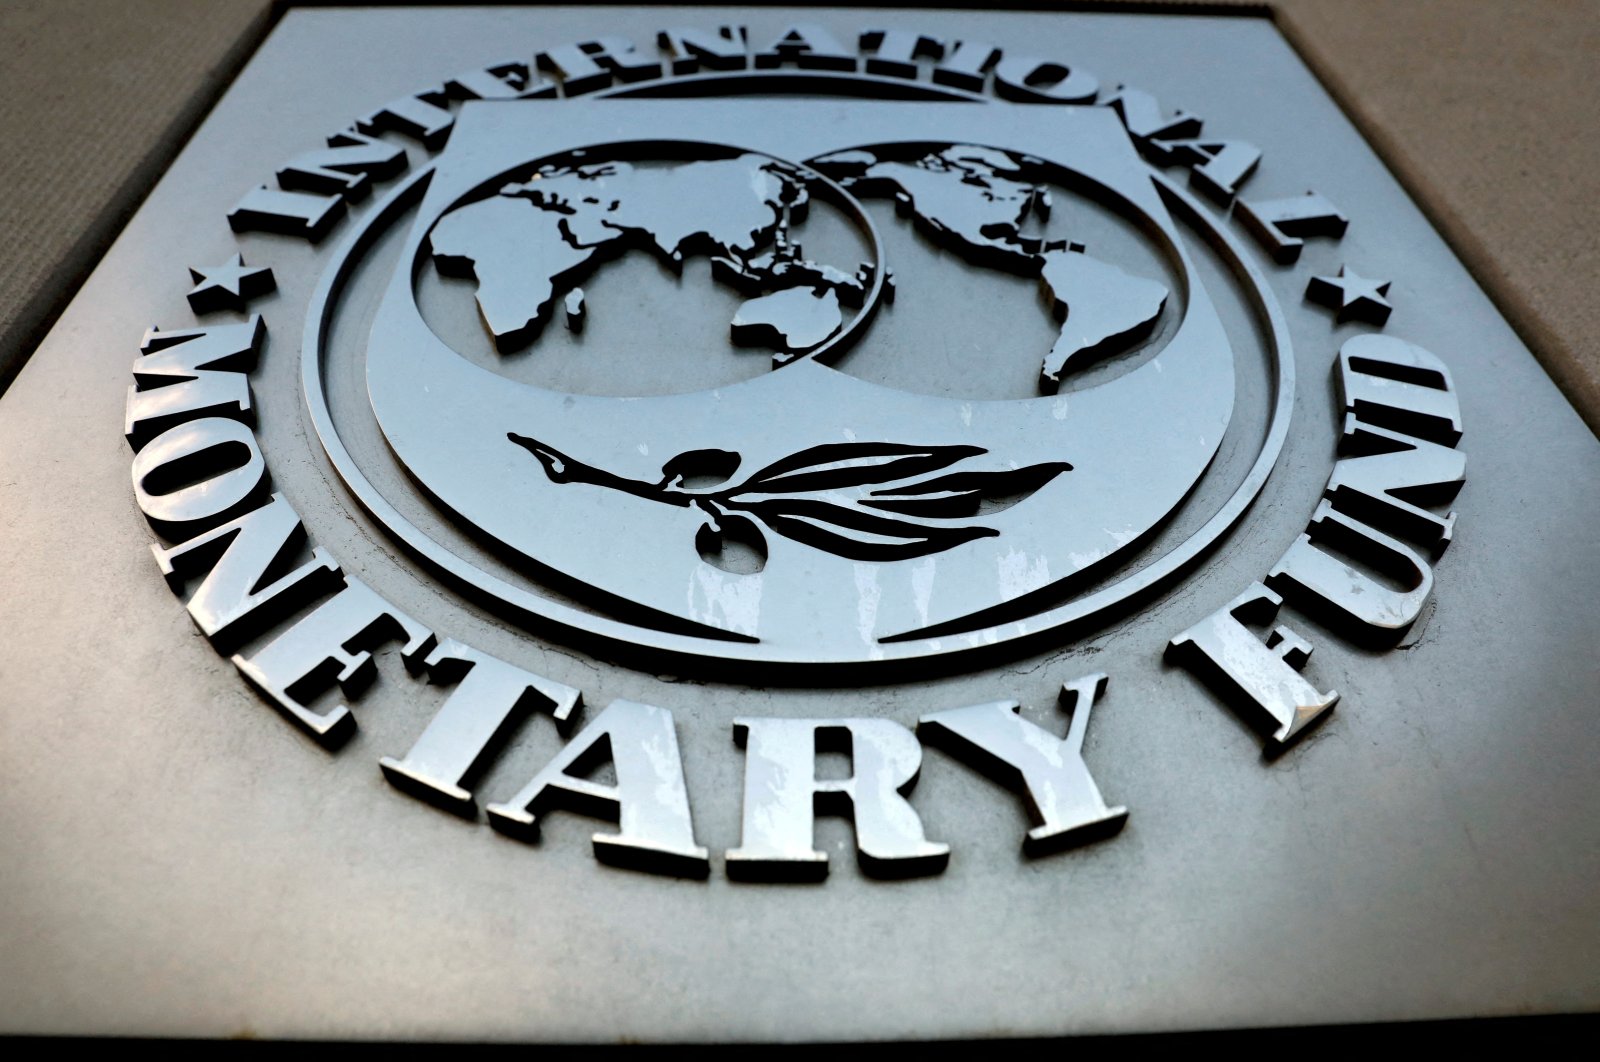 The International Monetary Fund (IMF) logo outside the headquarters building in Washington, U.S., Sept. 4, 2018. (Reuters Photo)